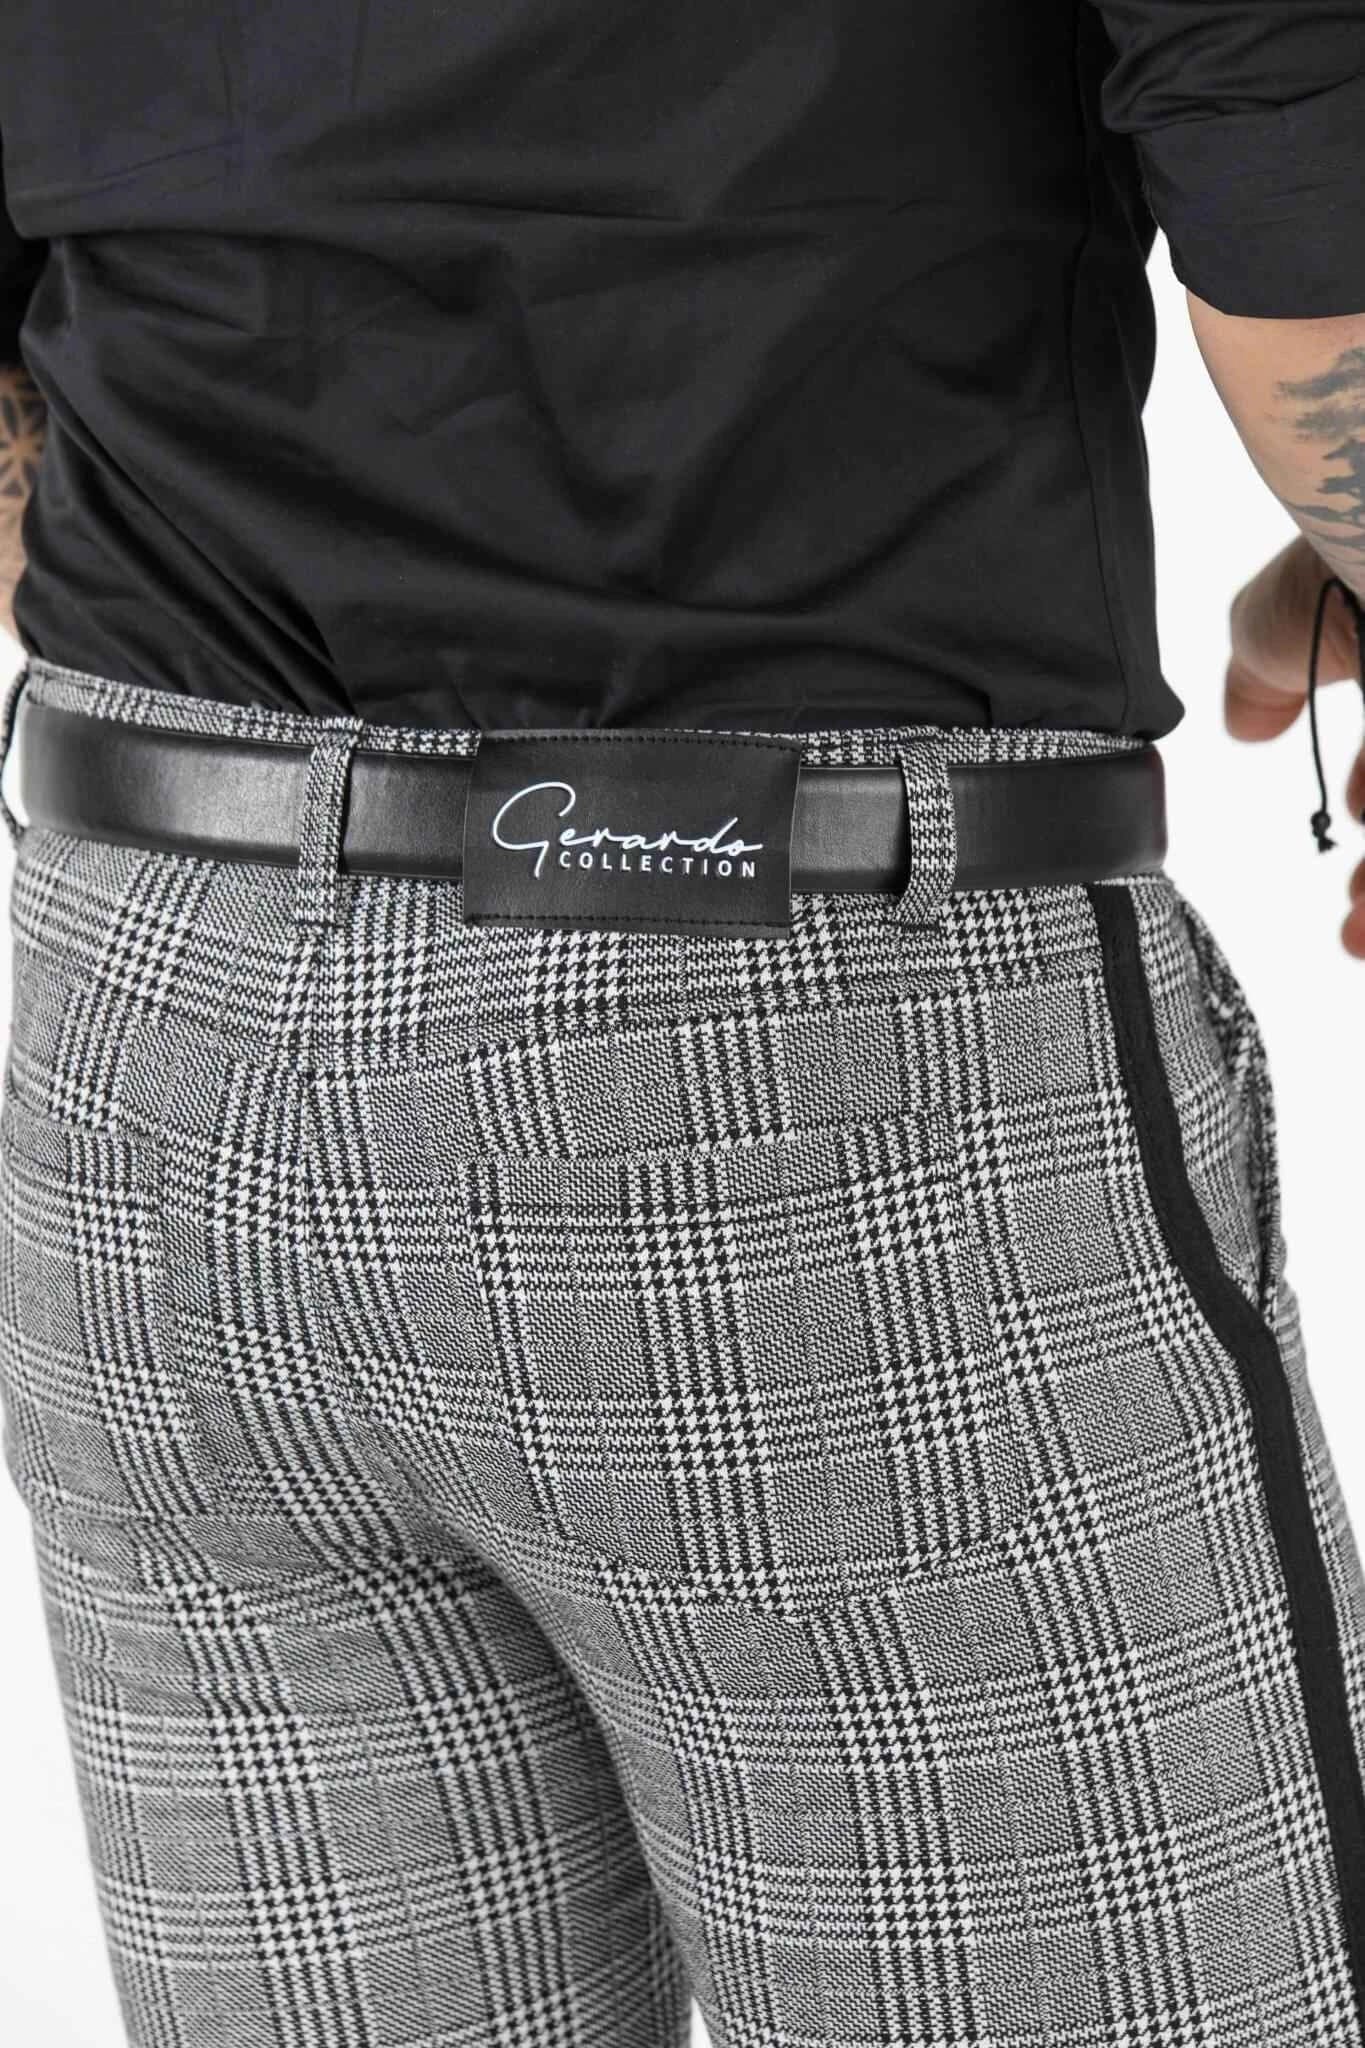 Mens Grey & Black Plaid Dress Pants - Gerardo Collection